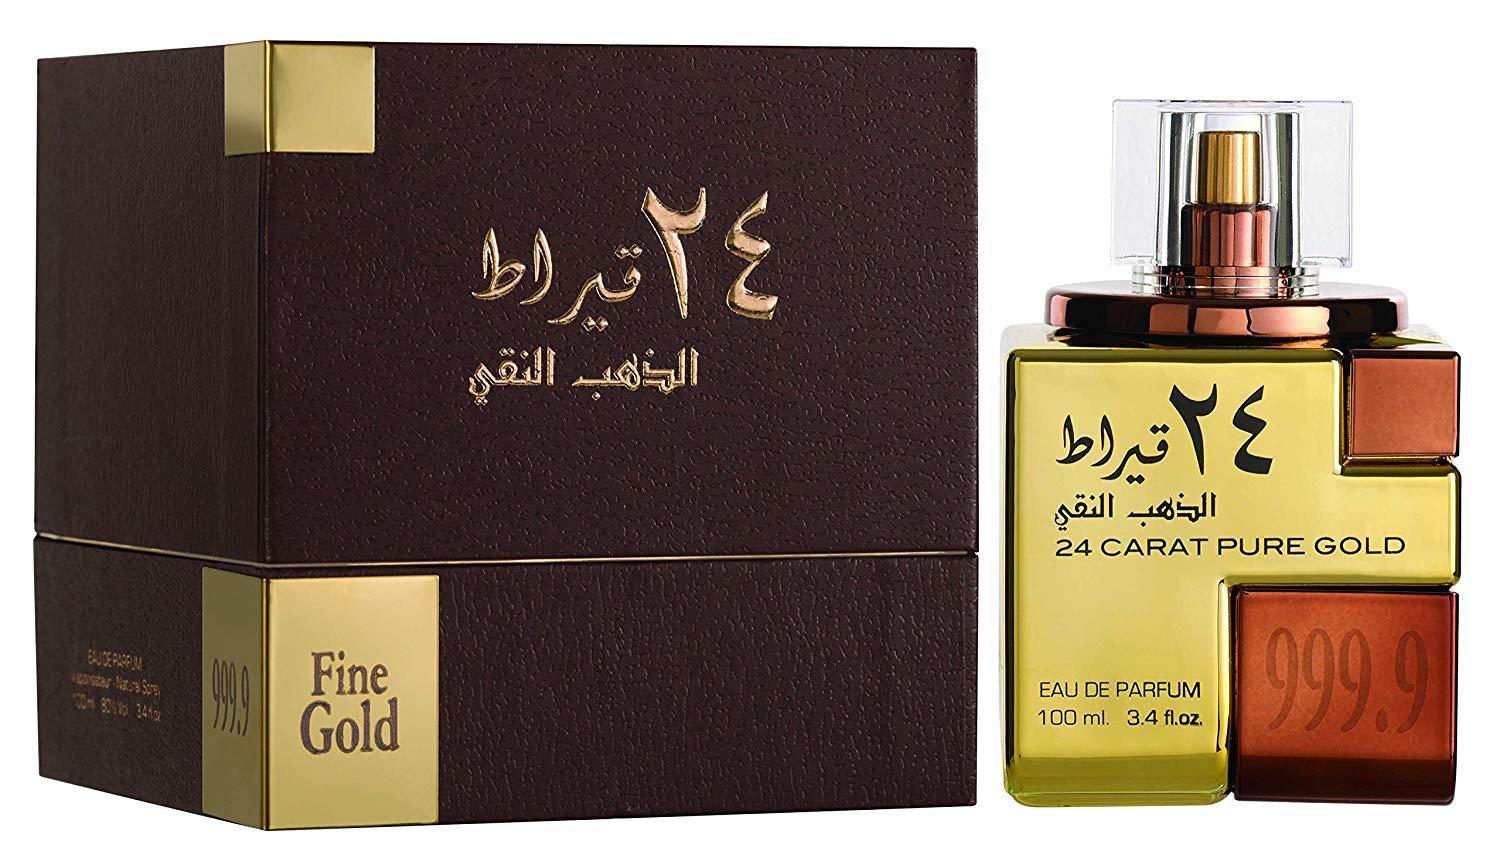 24 Carat Pure Gold EDP 100 ml by Lattafa @ ArabiaScents